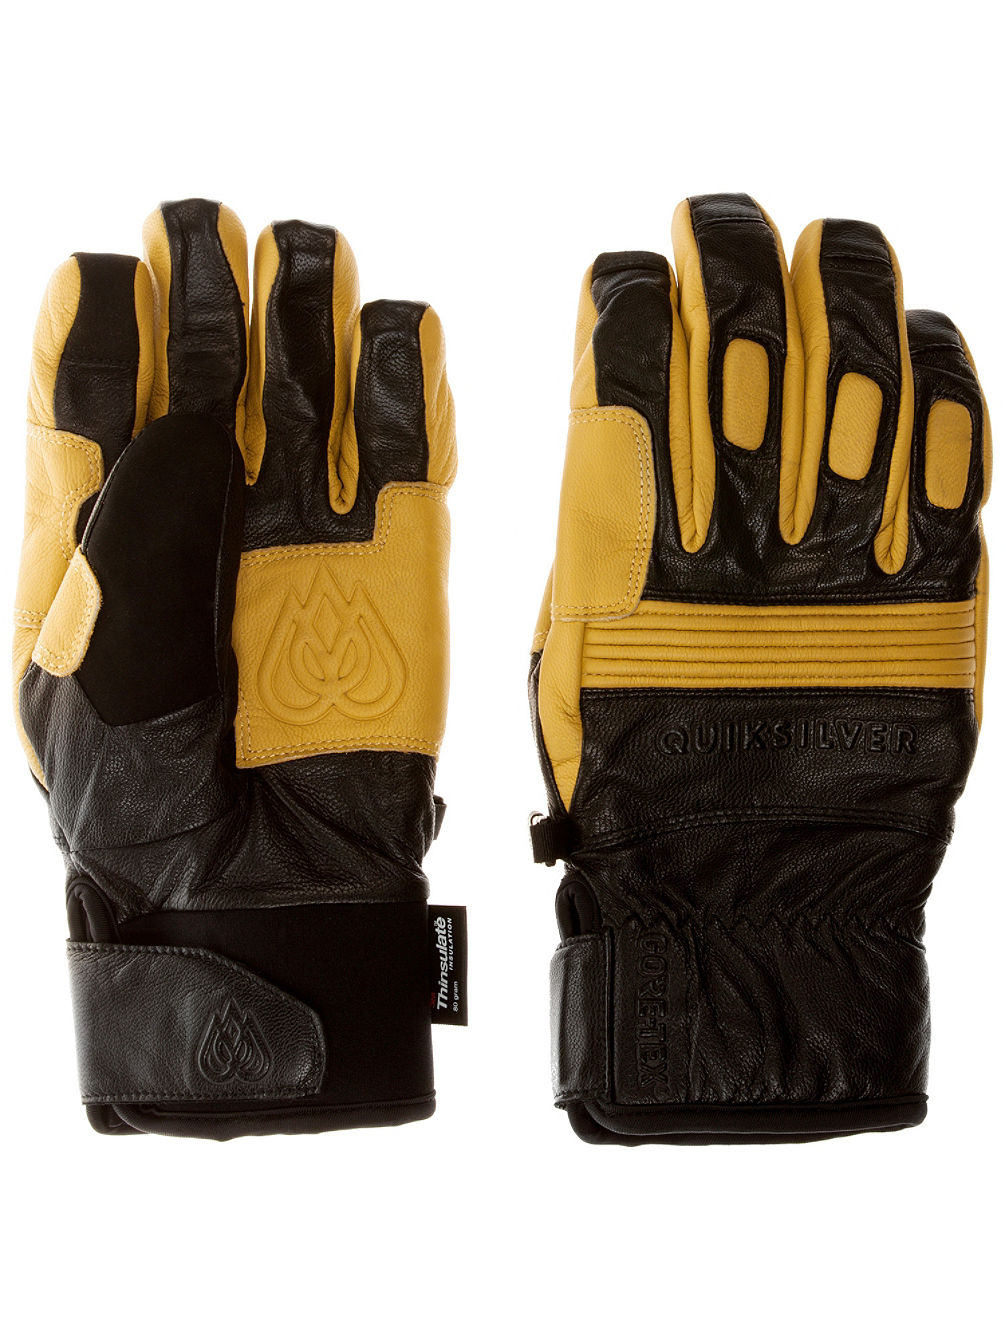 Travis Rice Natural Gore-Tex Gloves